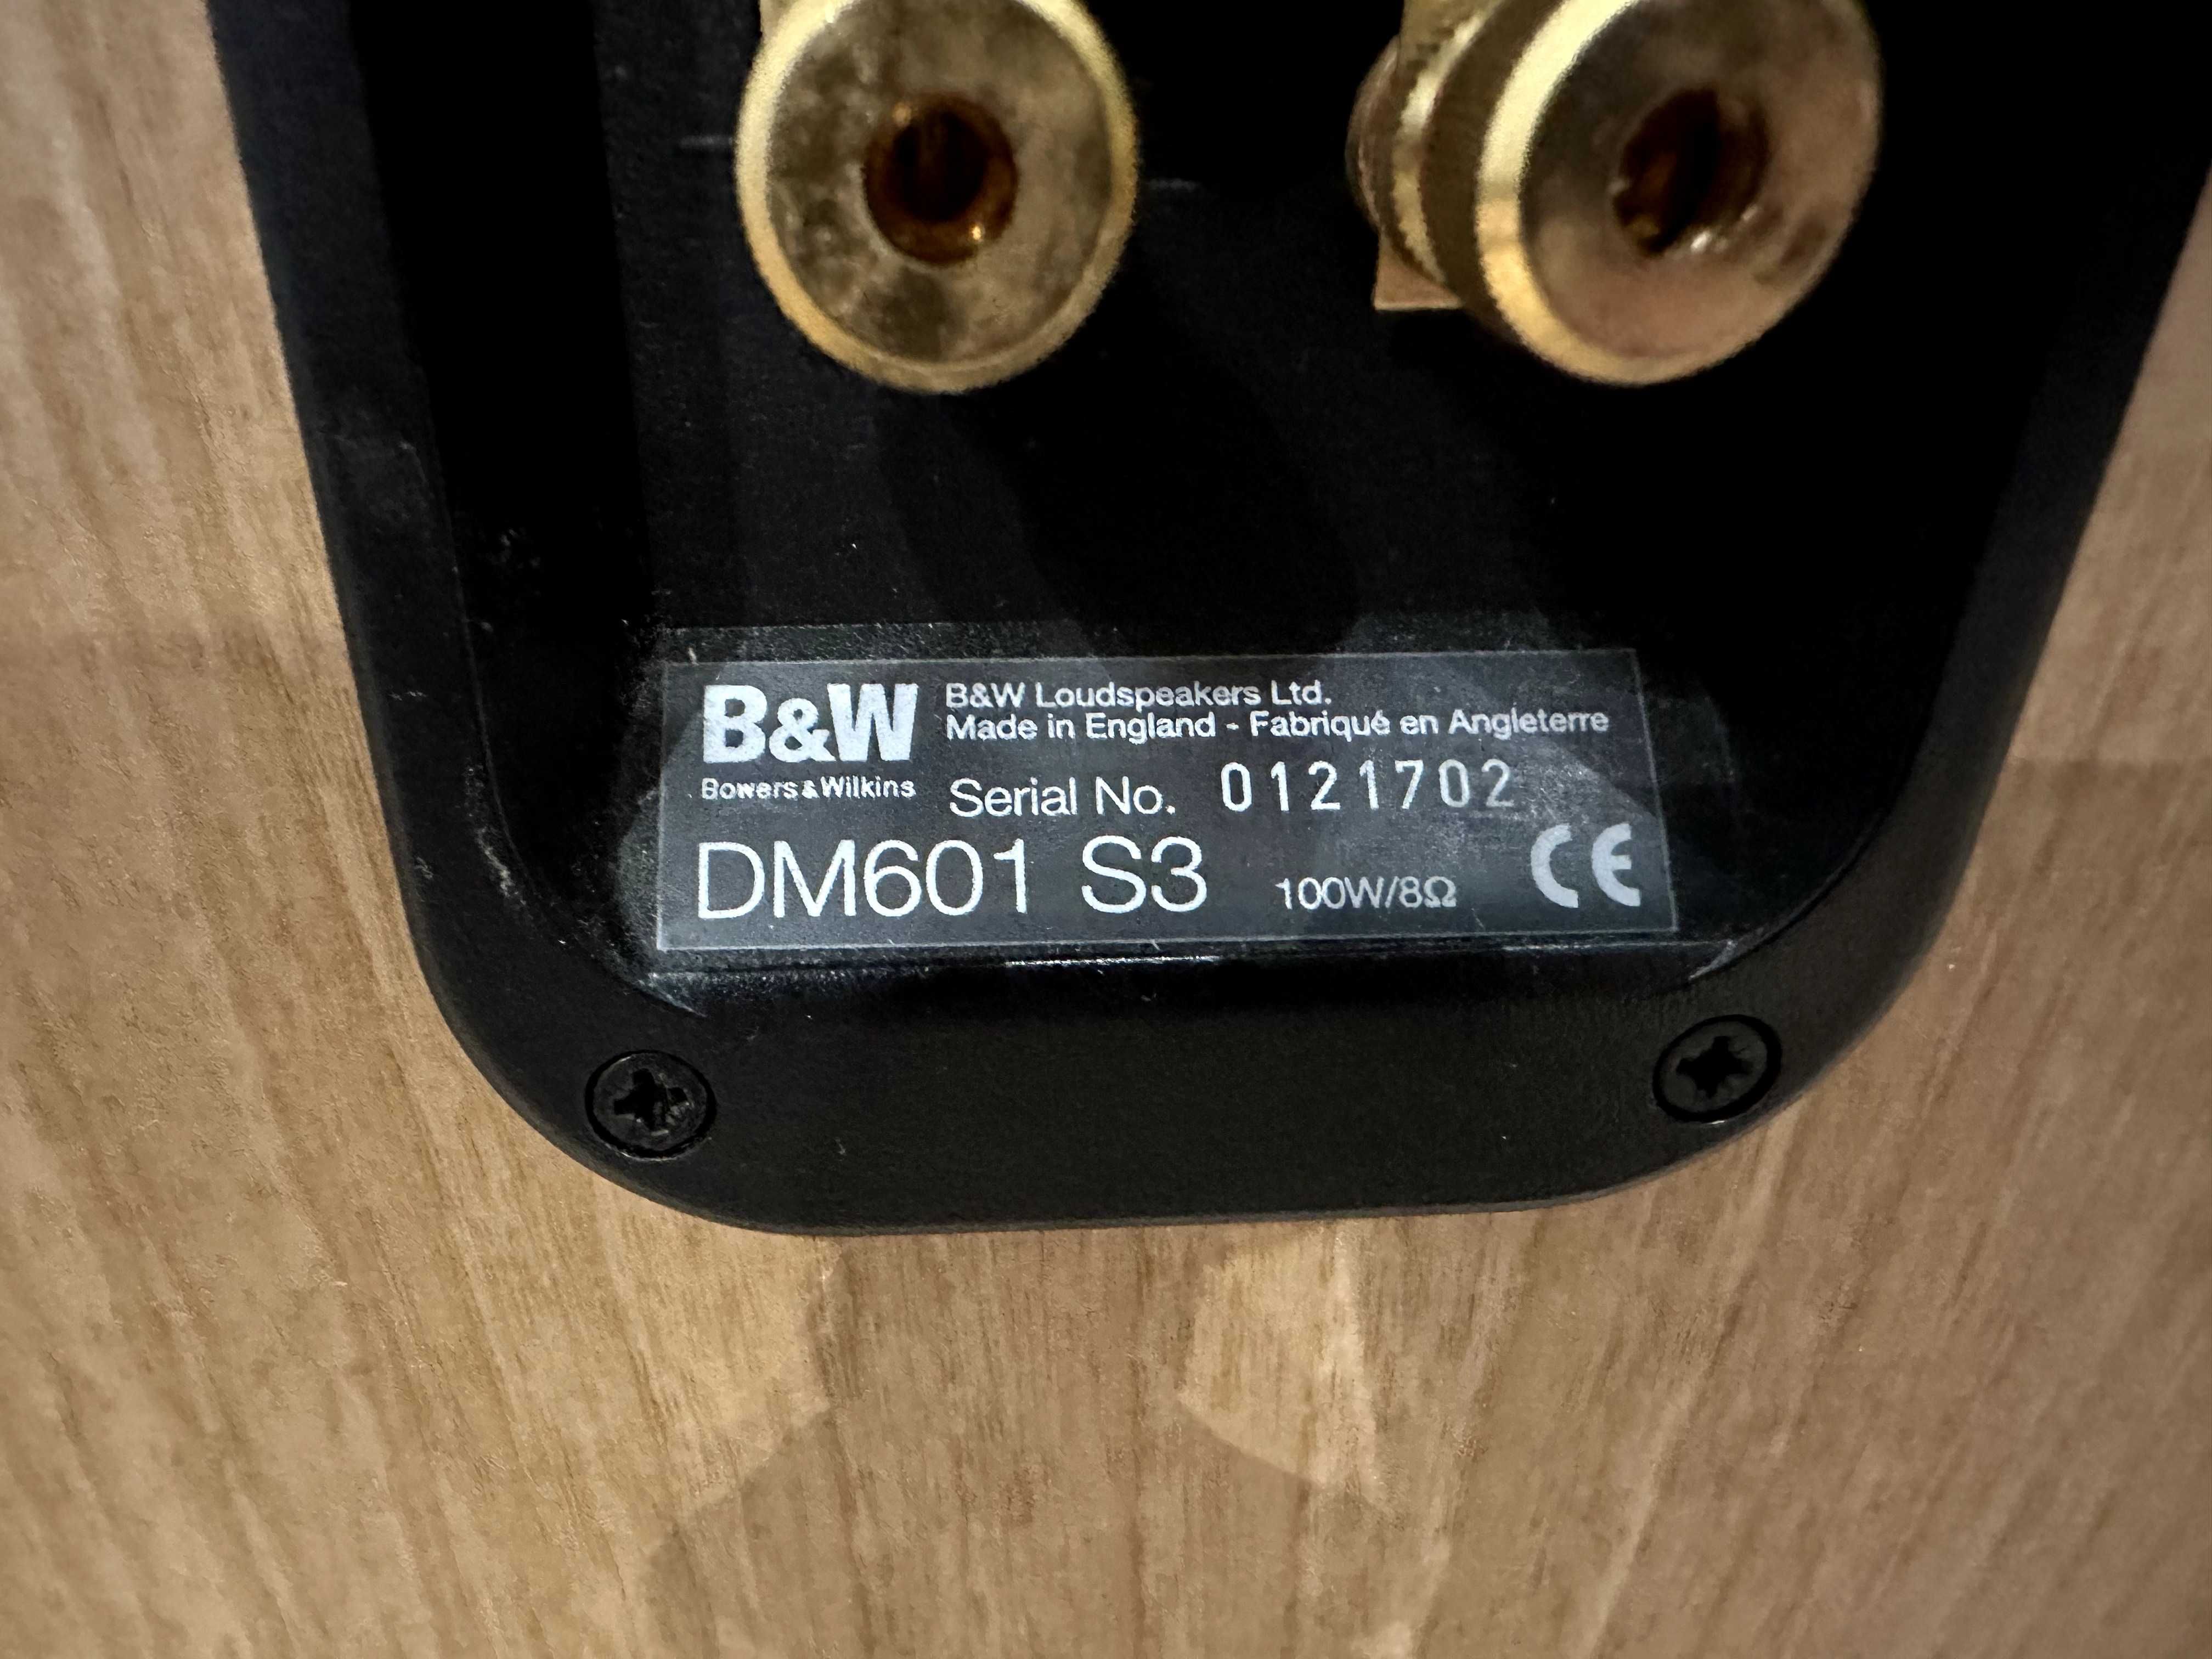 Amplituner Yamaha ax-396RDS wraz z kinem domowym B&W dm601